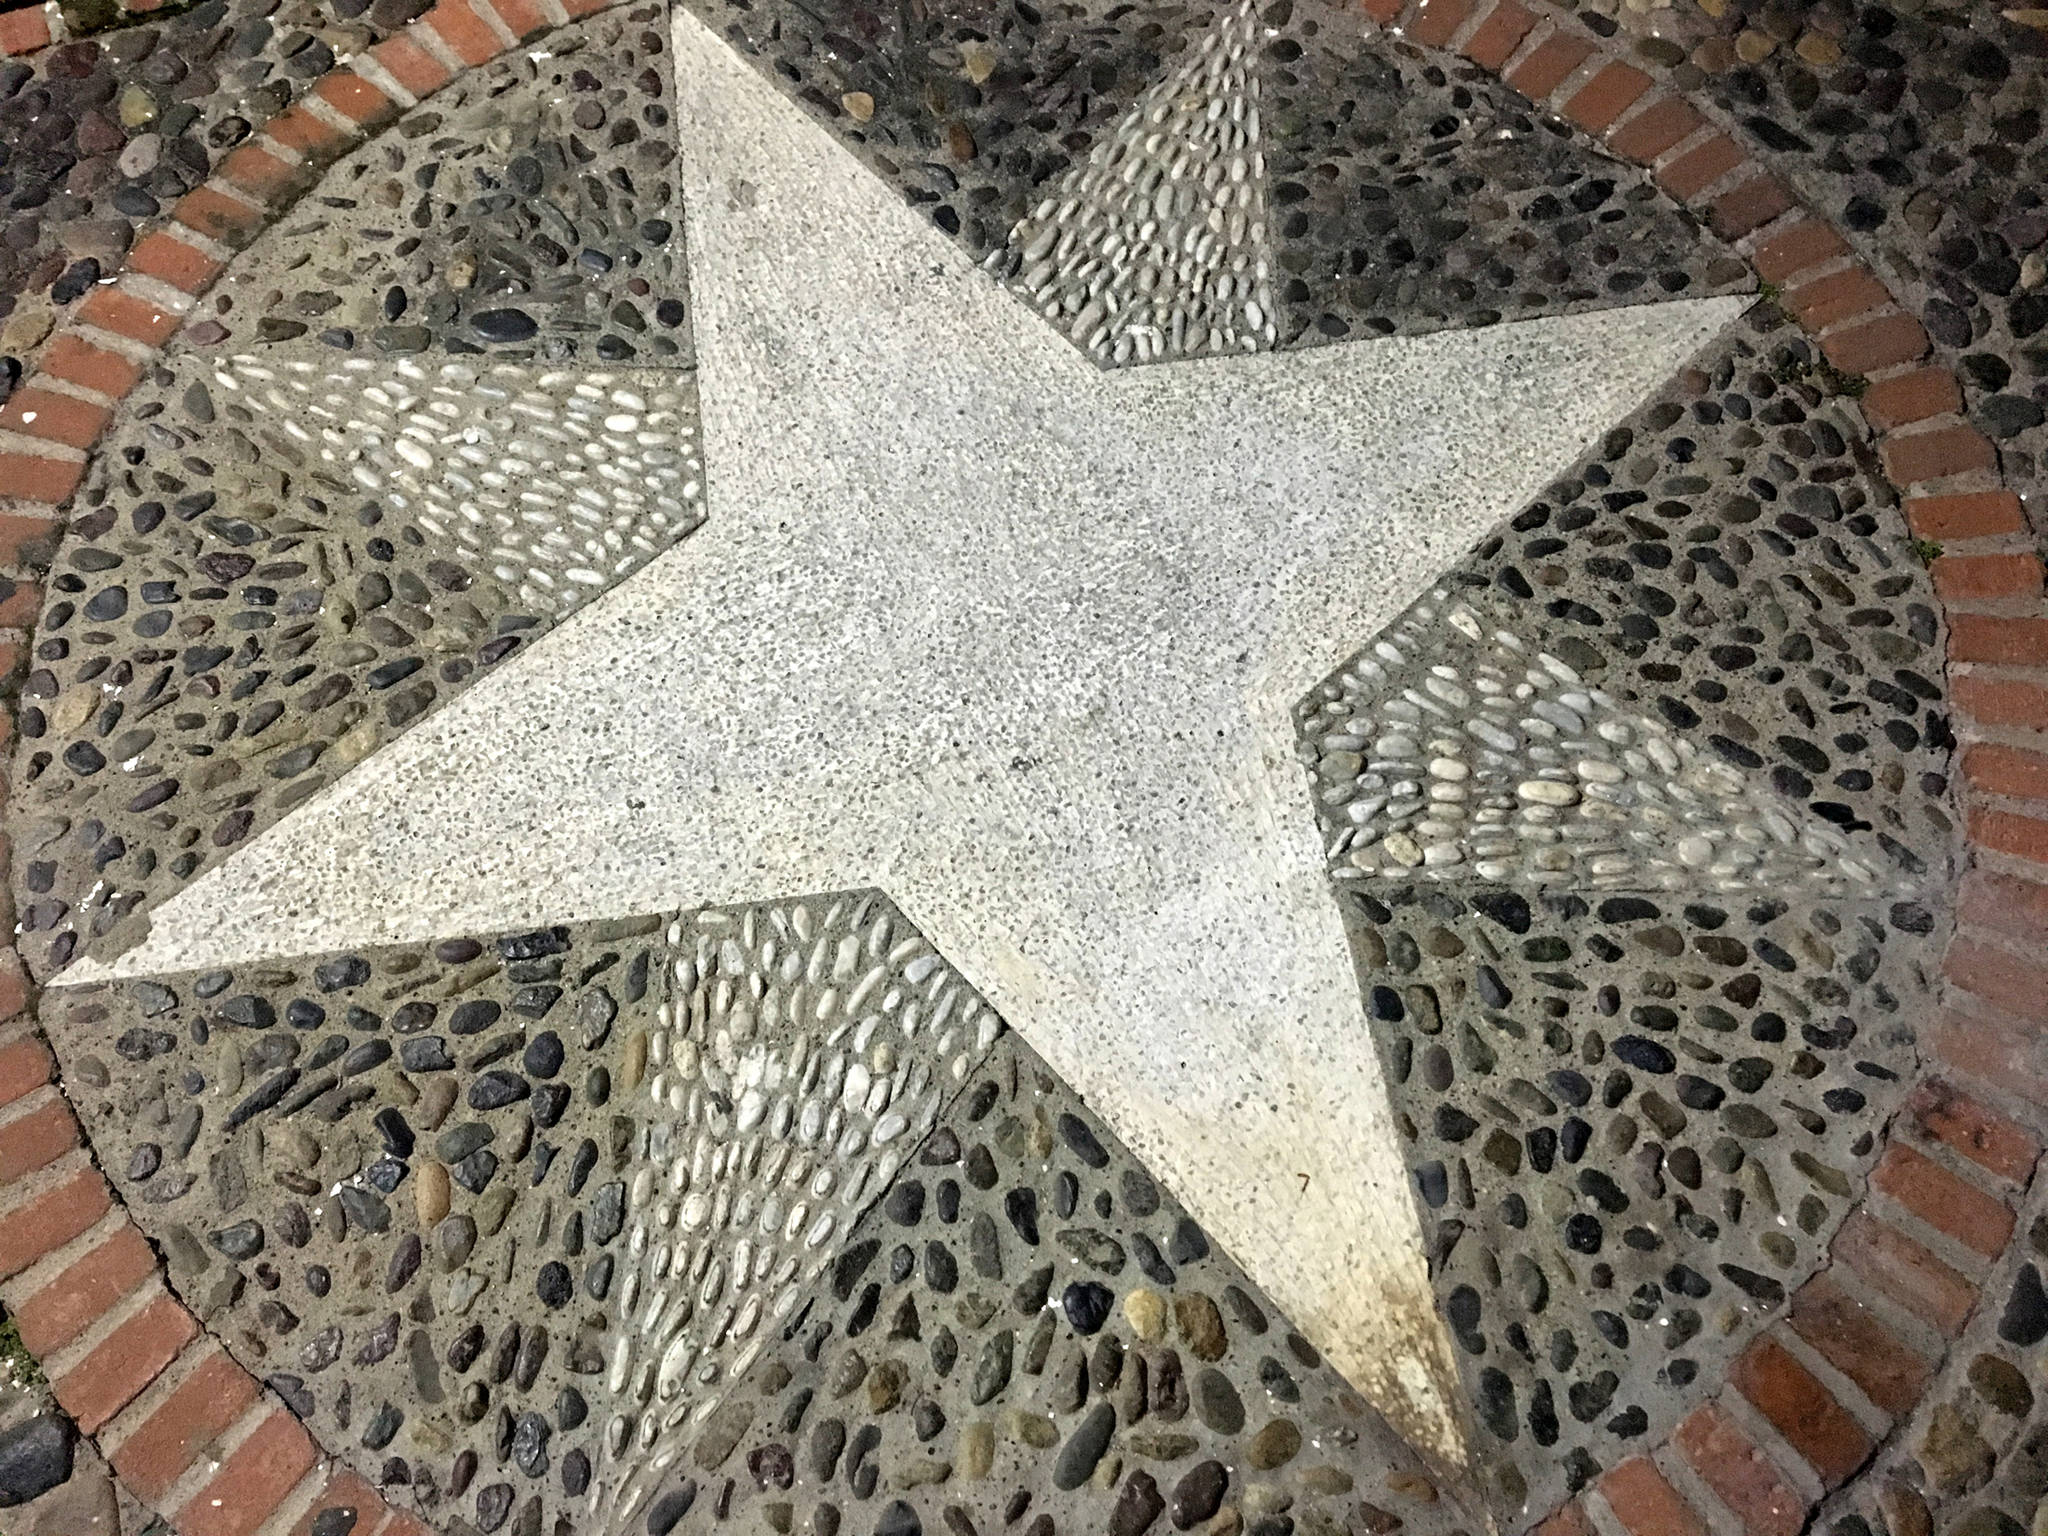 A double star design along a beach walkway in Puerto Vallarta. Photo by Denise Carroll.